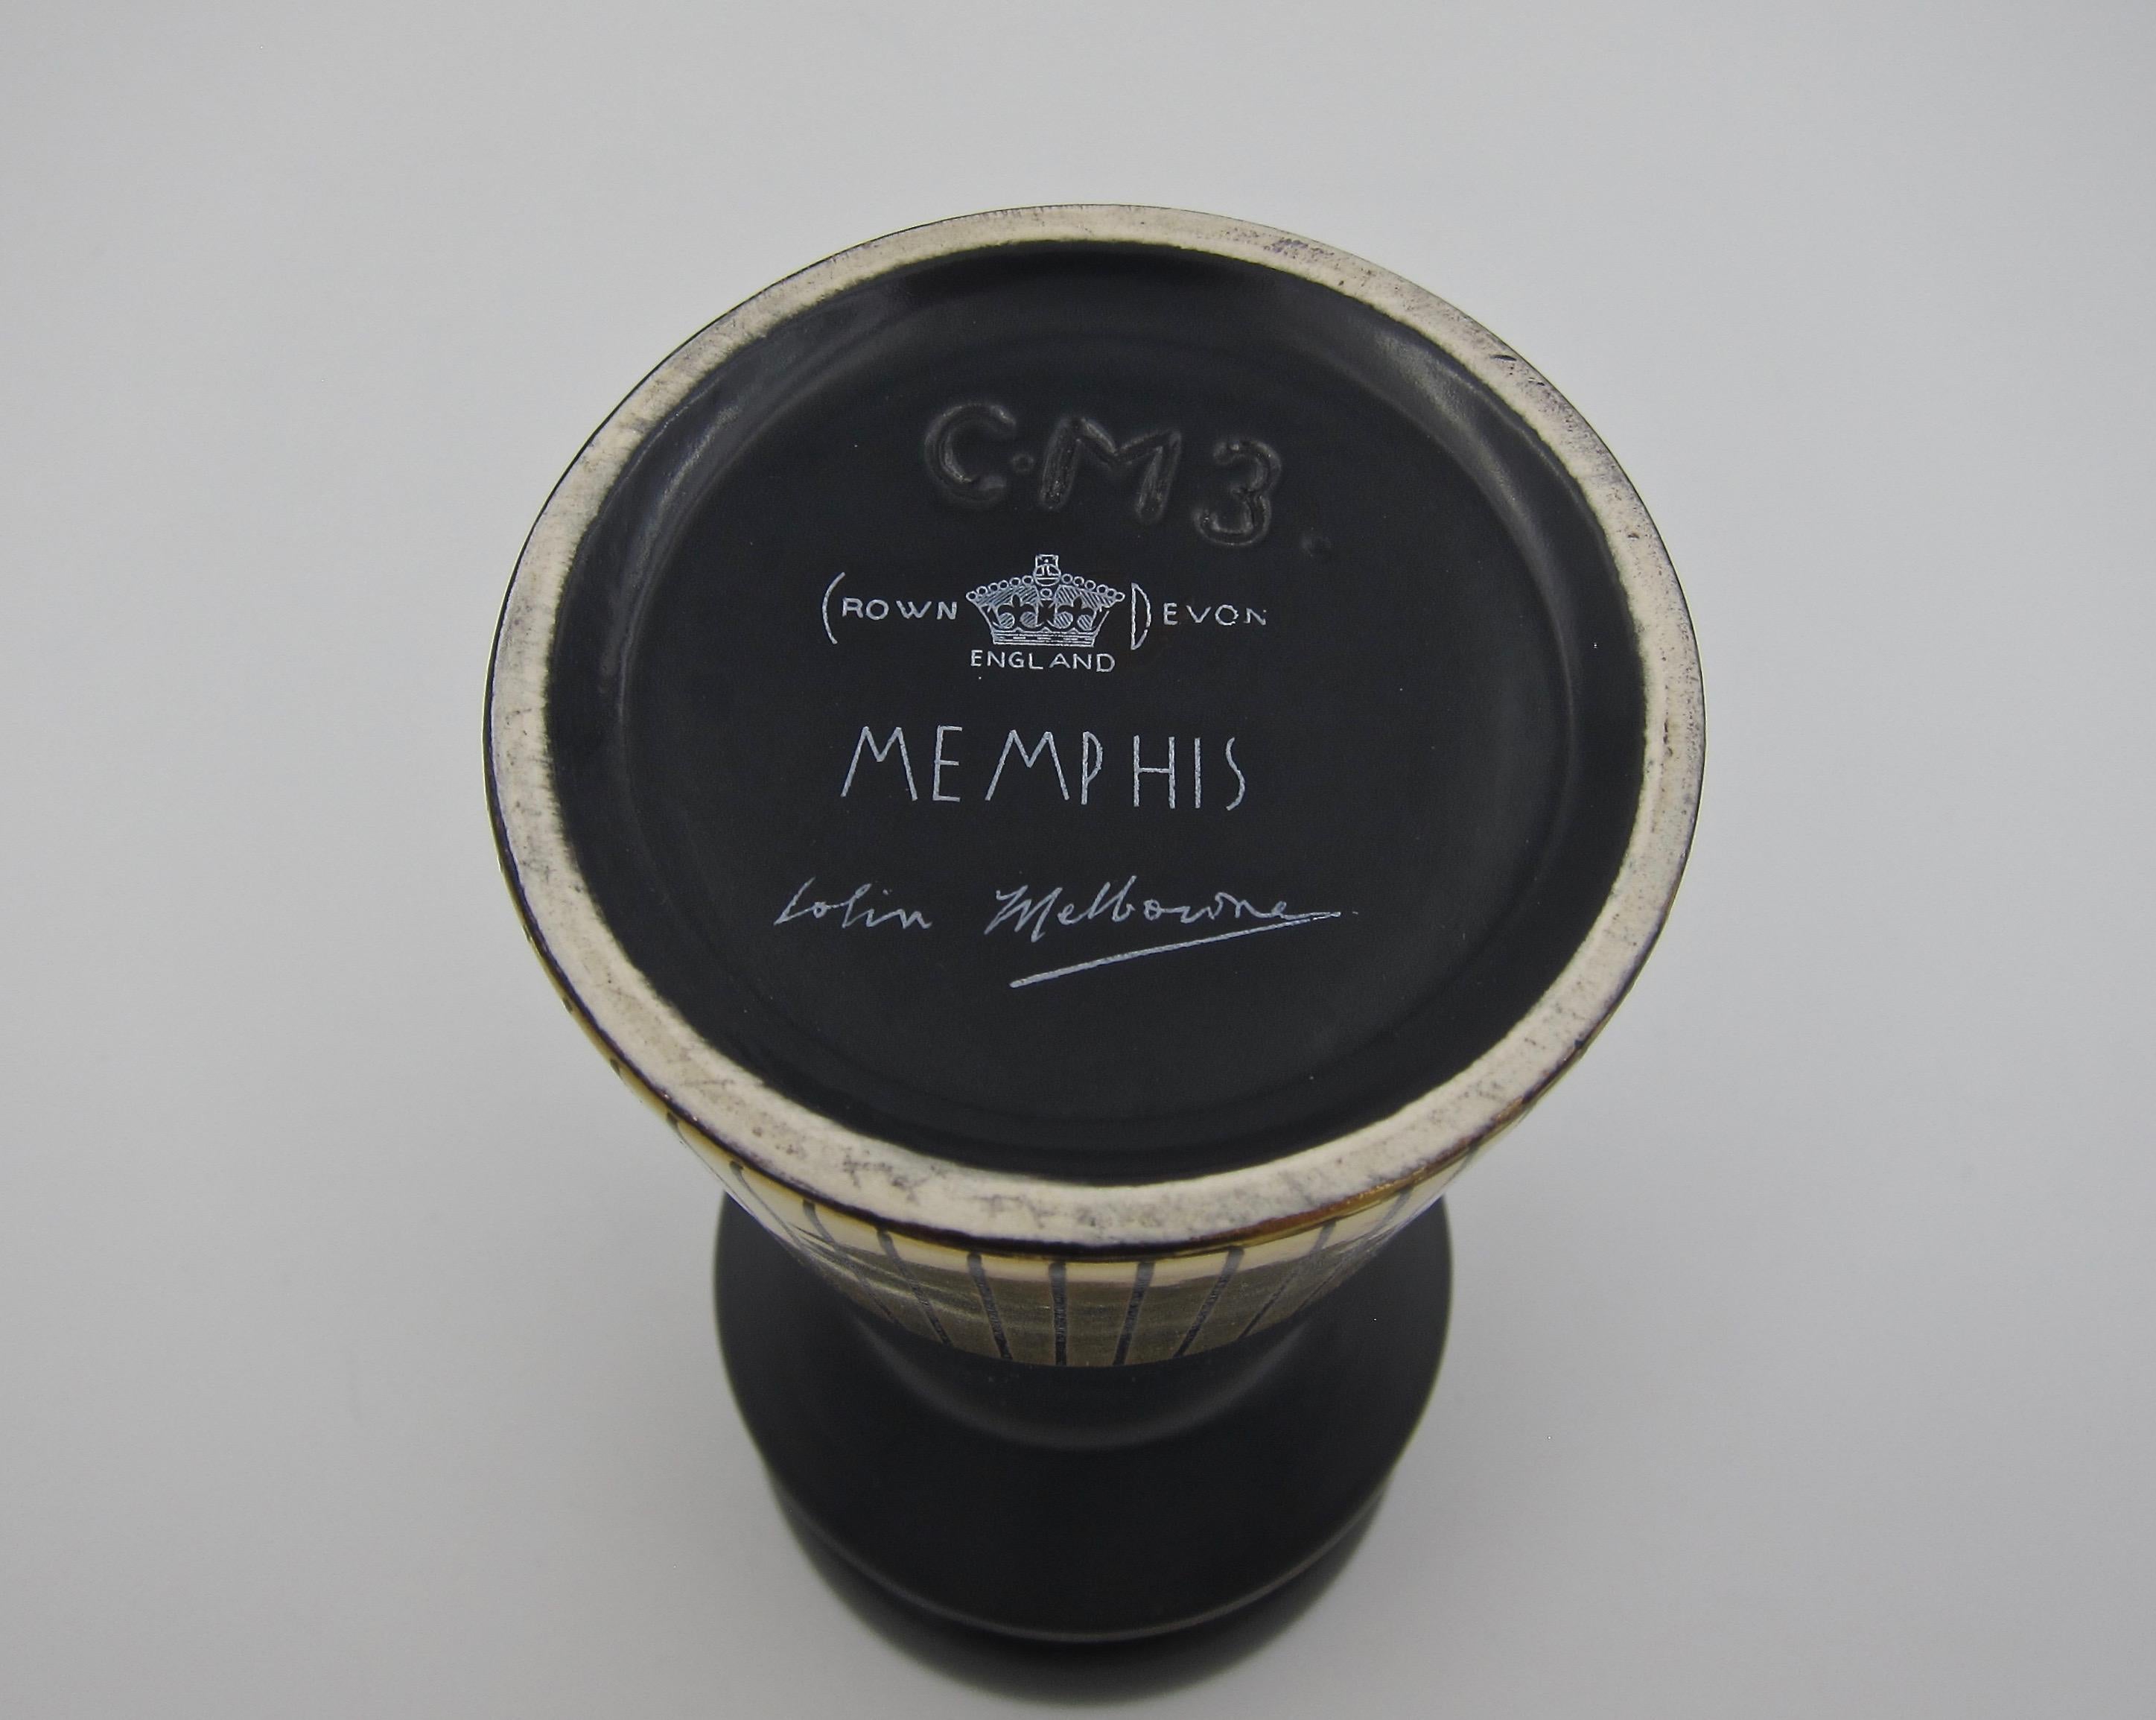 Ceramic English Black and Gold Memphis Vase by Colin Melbourne for Crown Devon